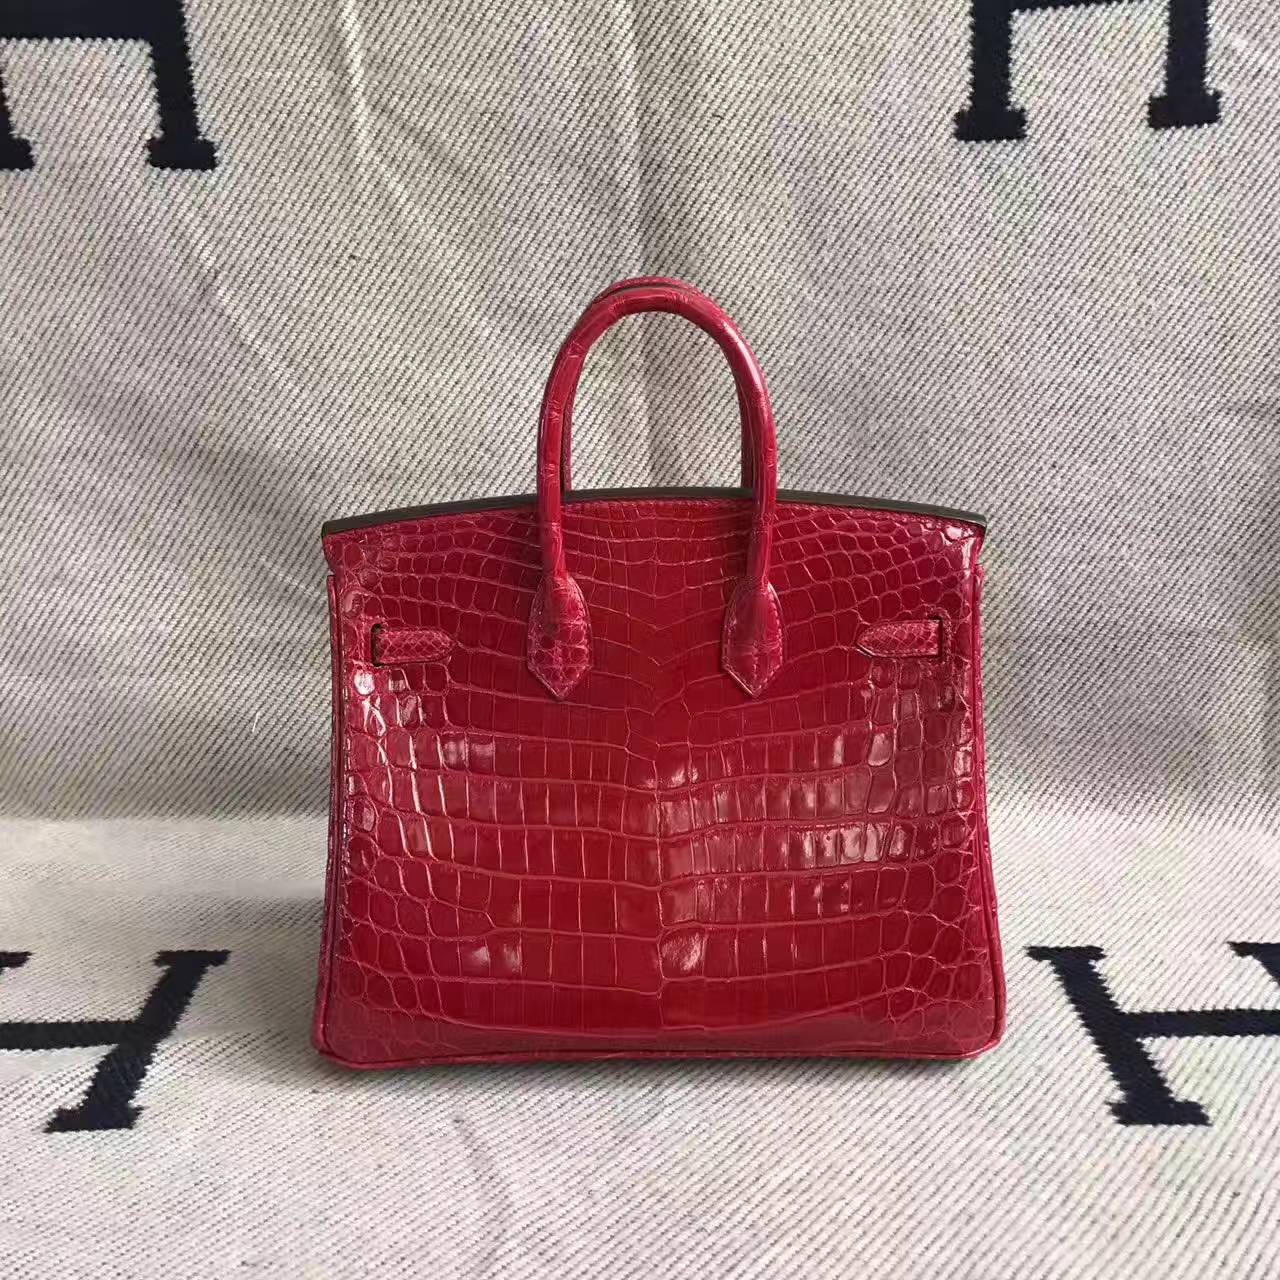 Wholesale Hermes Red Crocodile Shiny Leather Birkin Bag 25cm